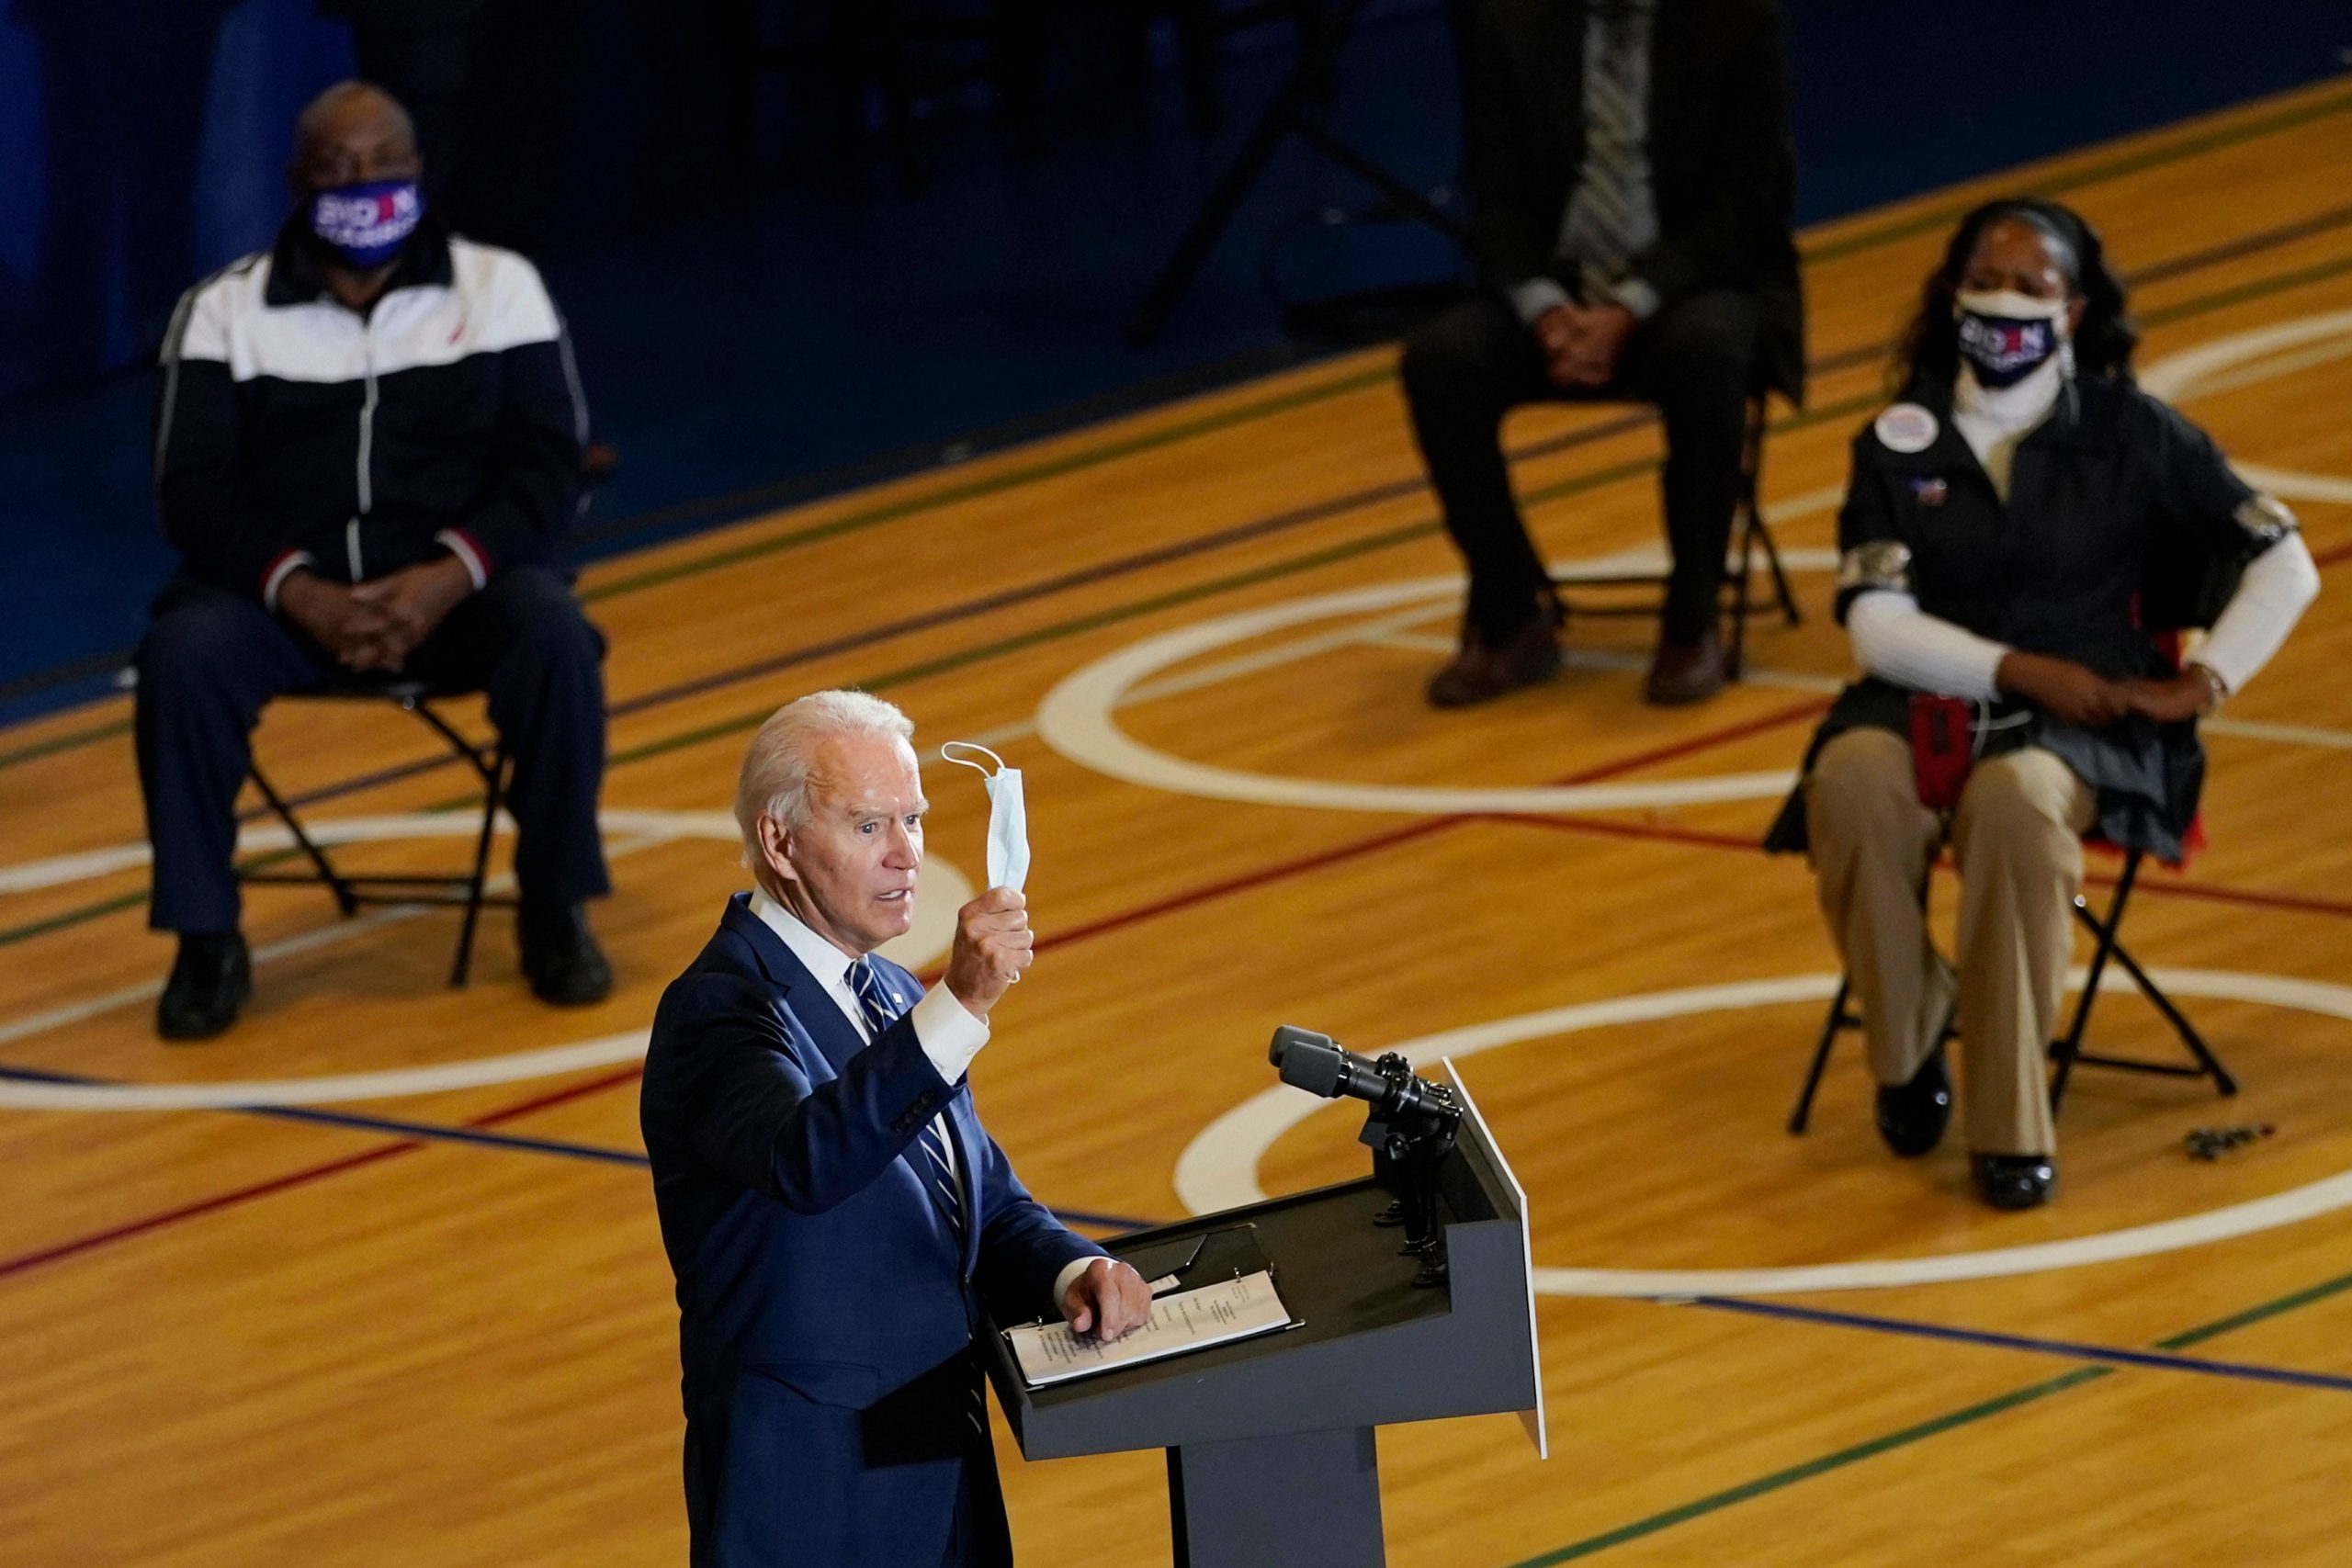 Not doing many rallies to prevent spread of coronavirus, says Joe Biden